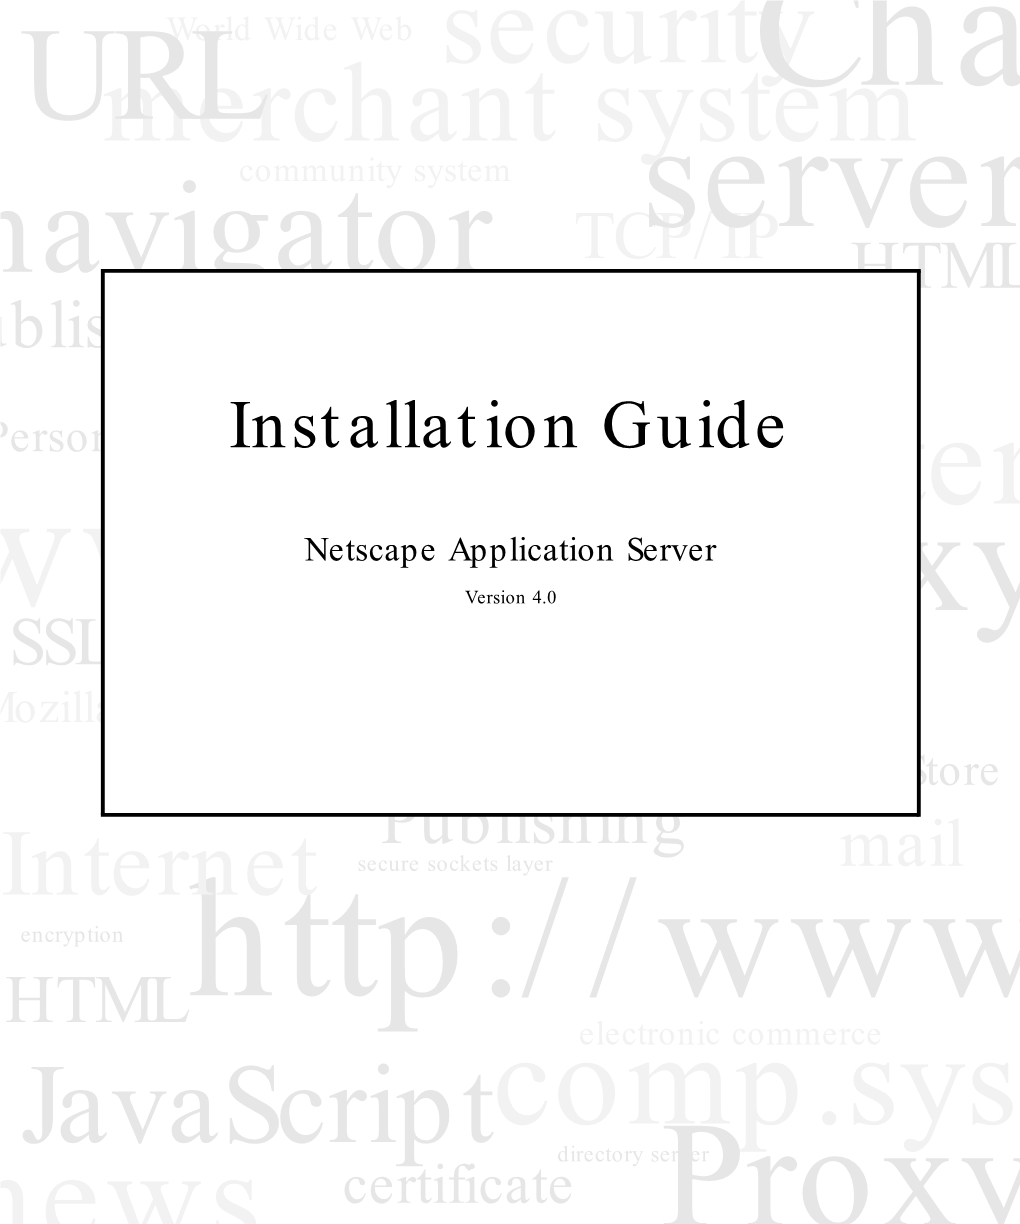 Netscape Application Server 4.0 Installation Guide